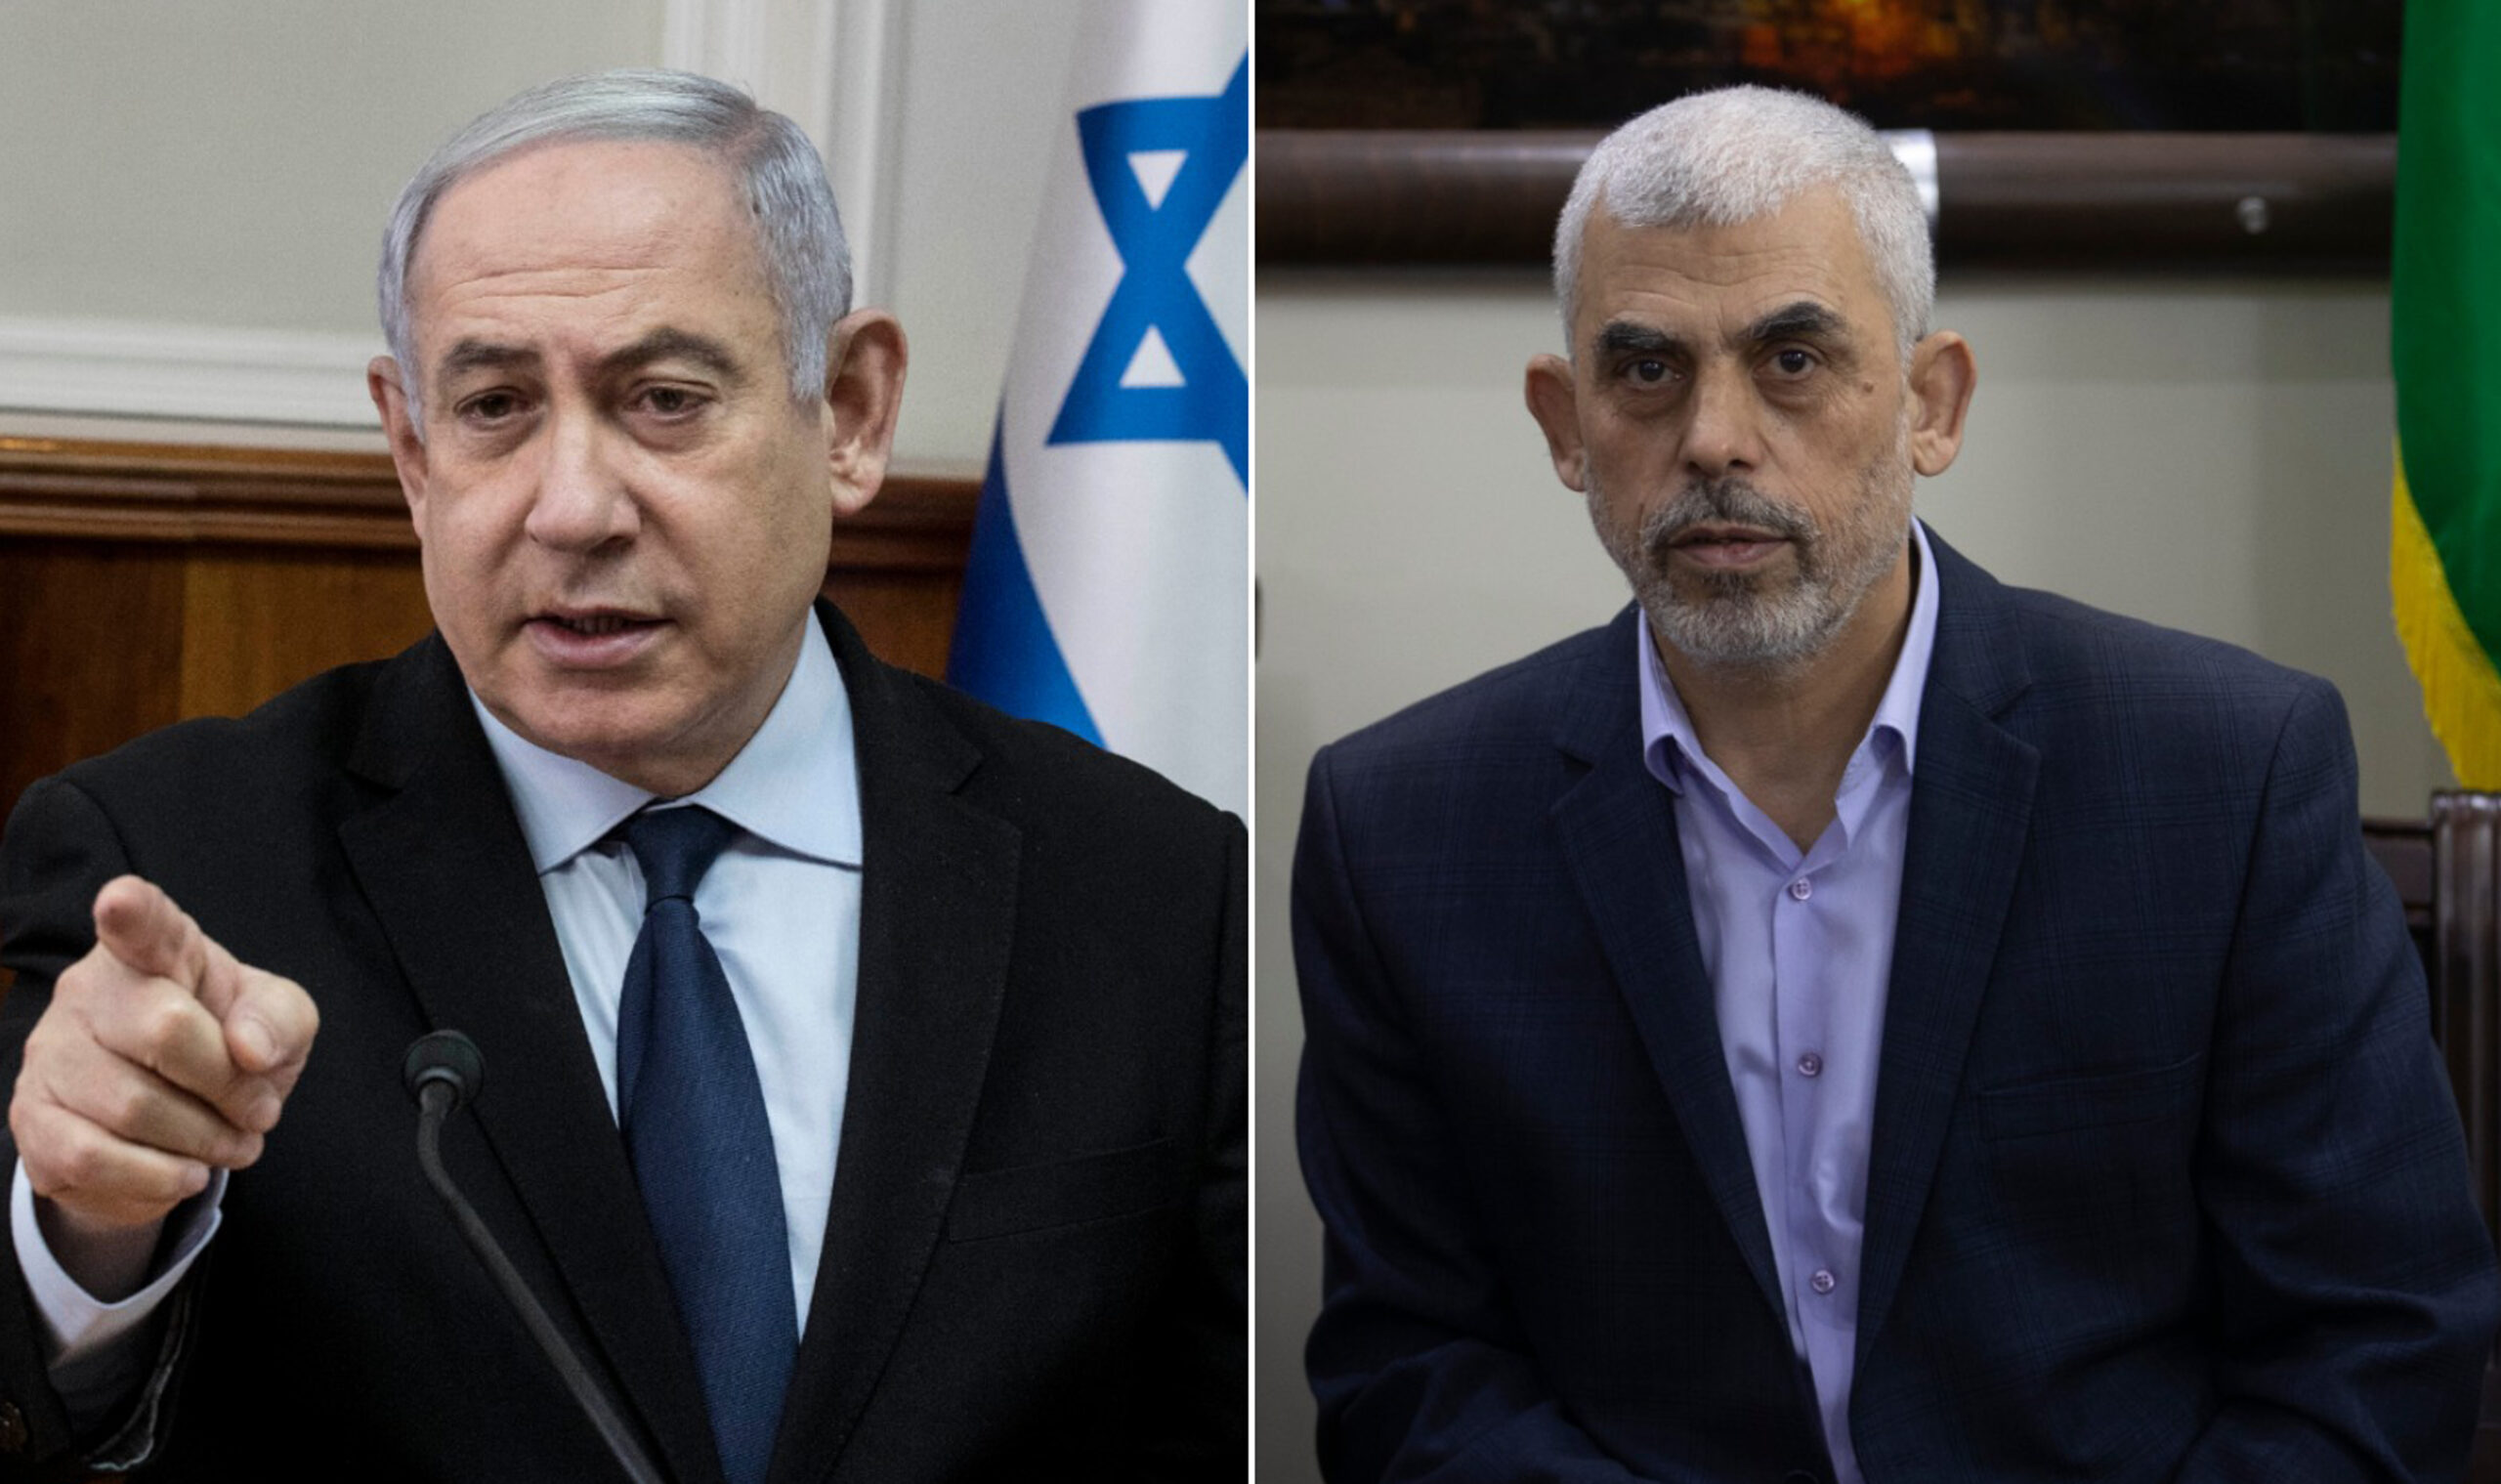 Demande de mandat d’arrêt international contre Benjamin Netanyahu et Yahya Sinwar, chef du Hamas